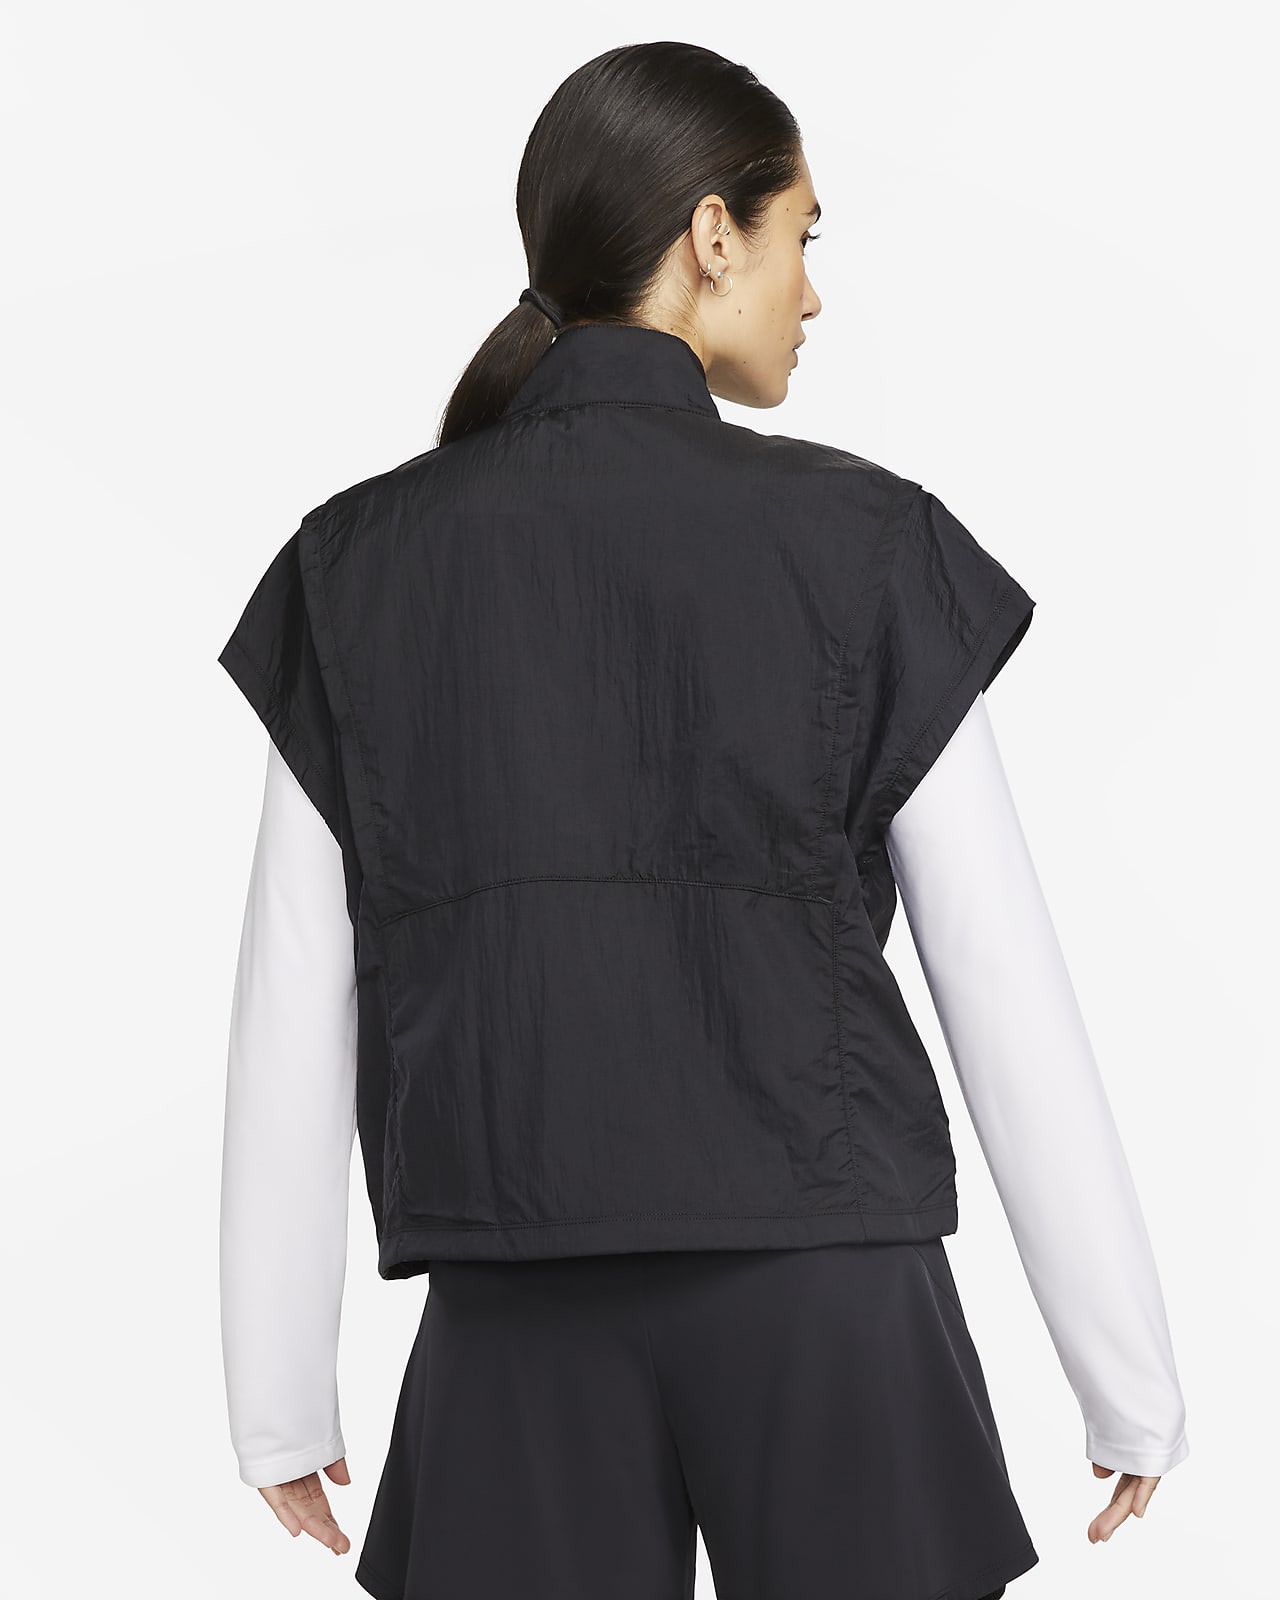 Nike Repel City Ready Women's Short-Sleeve Jacket